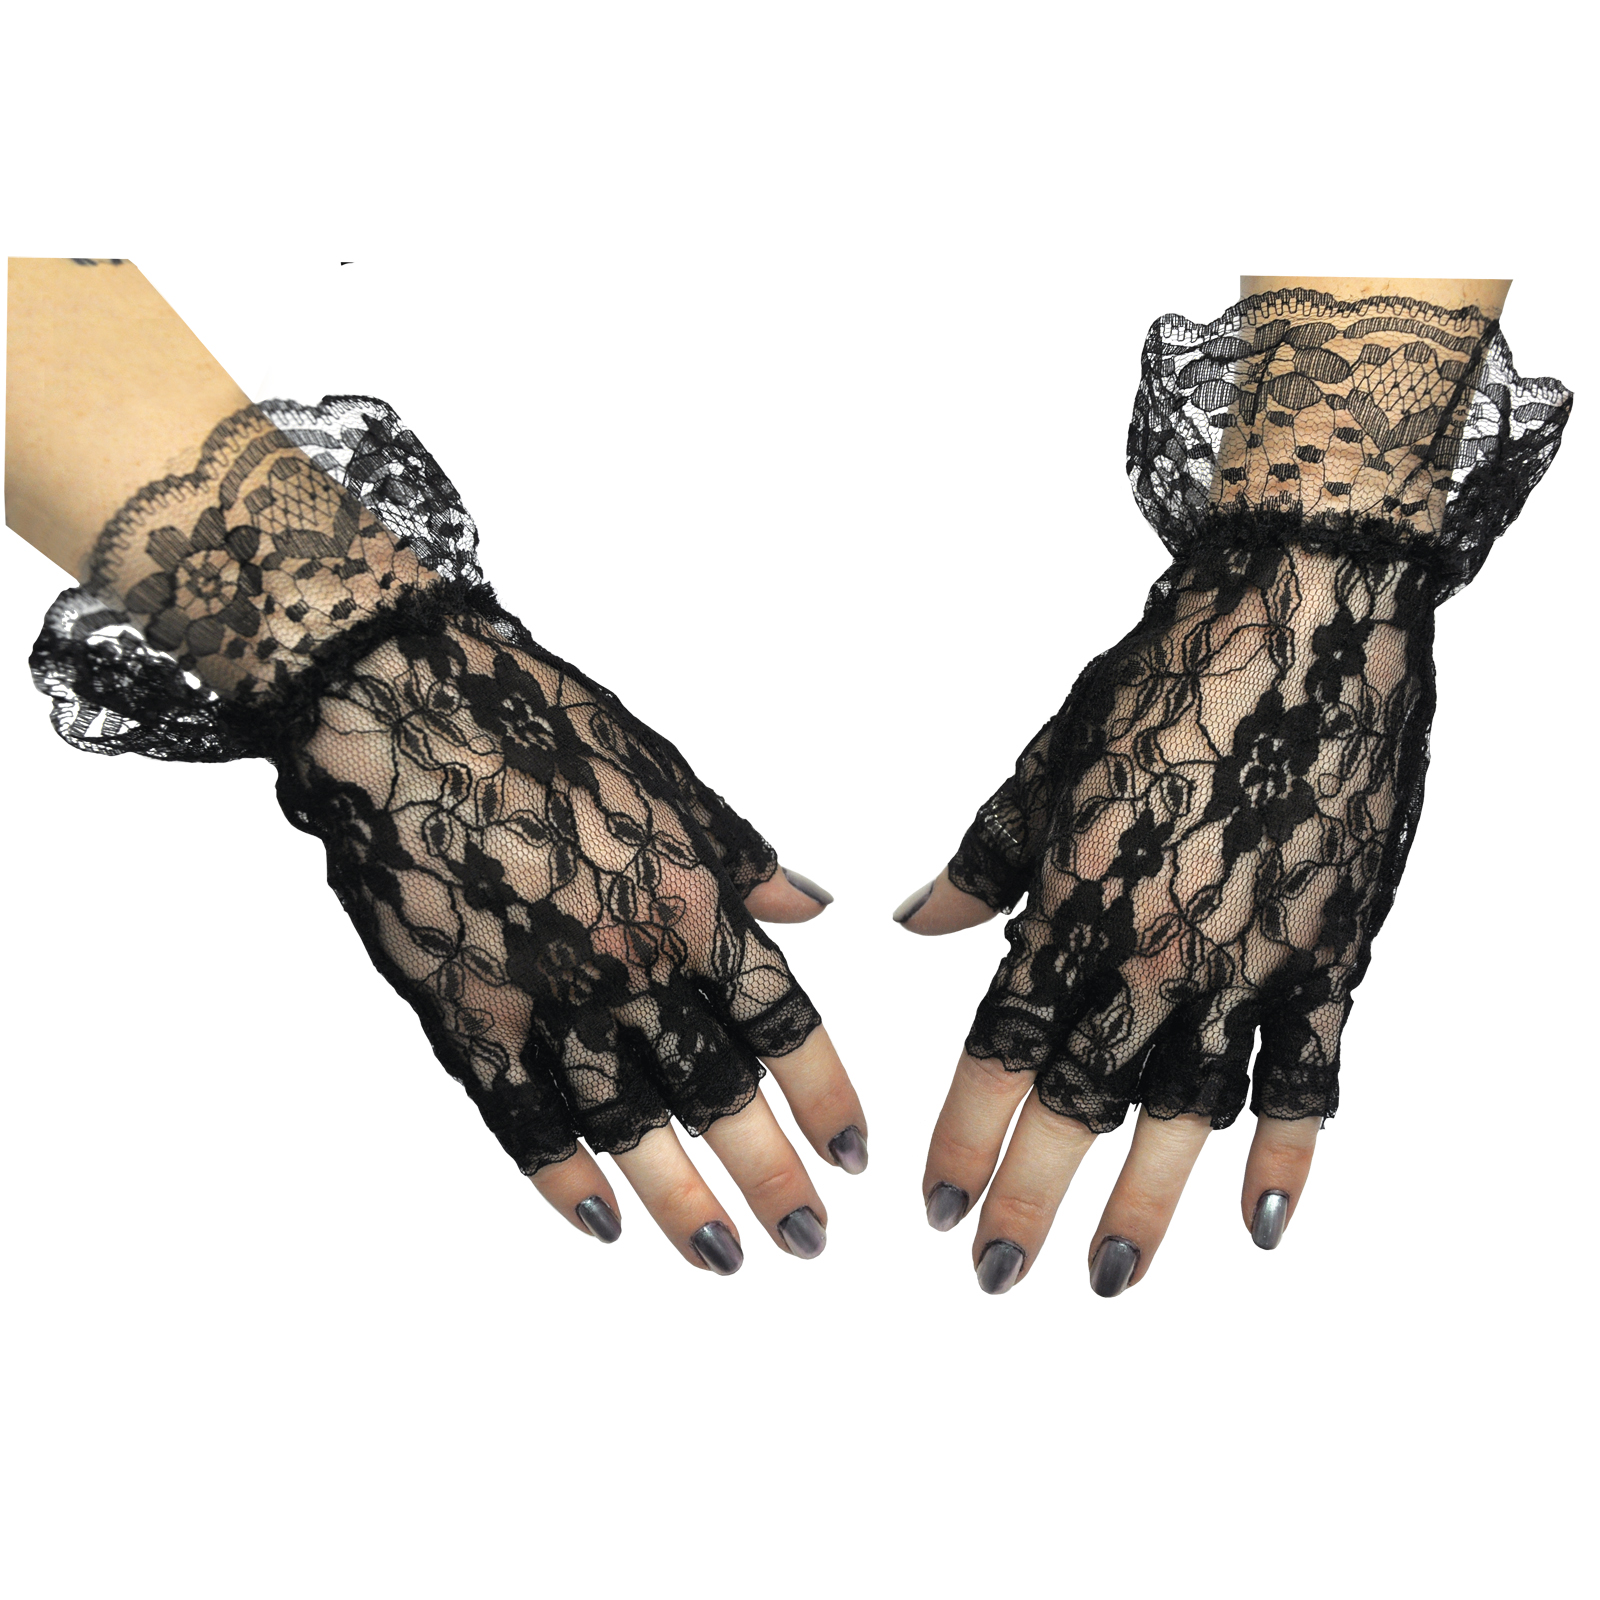 Gloves Black Fingerless 1 Size Costume Accessory